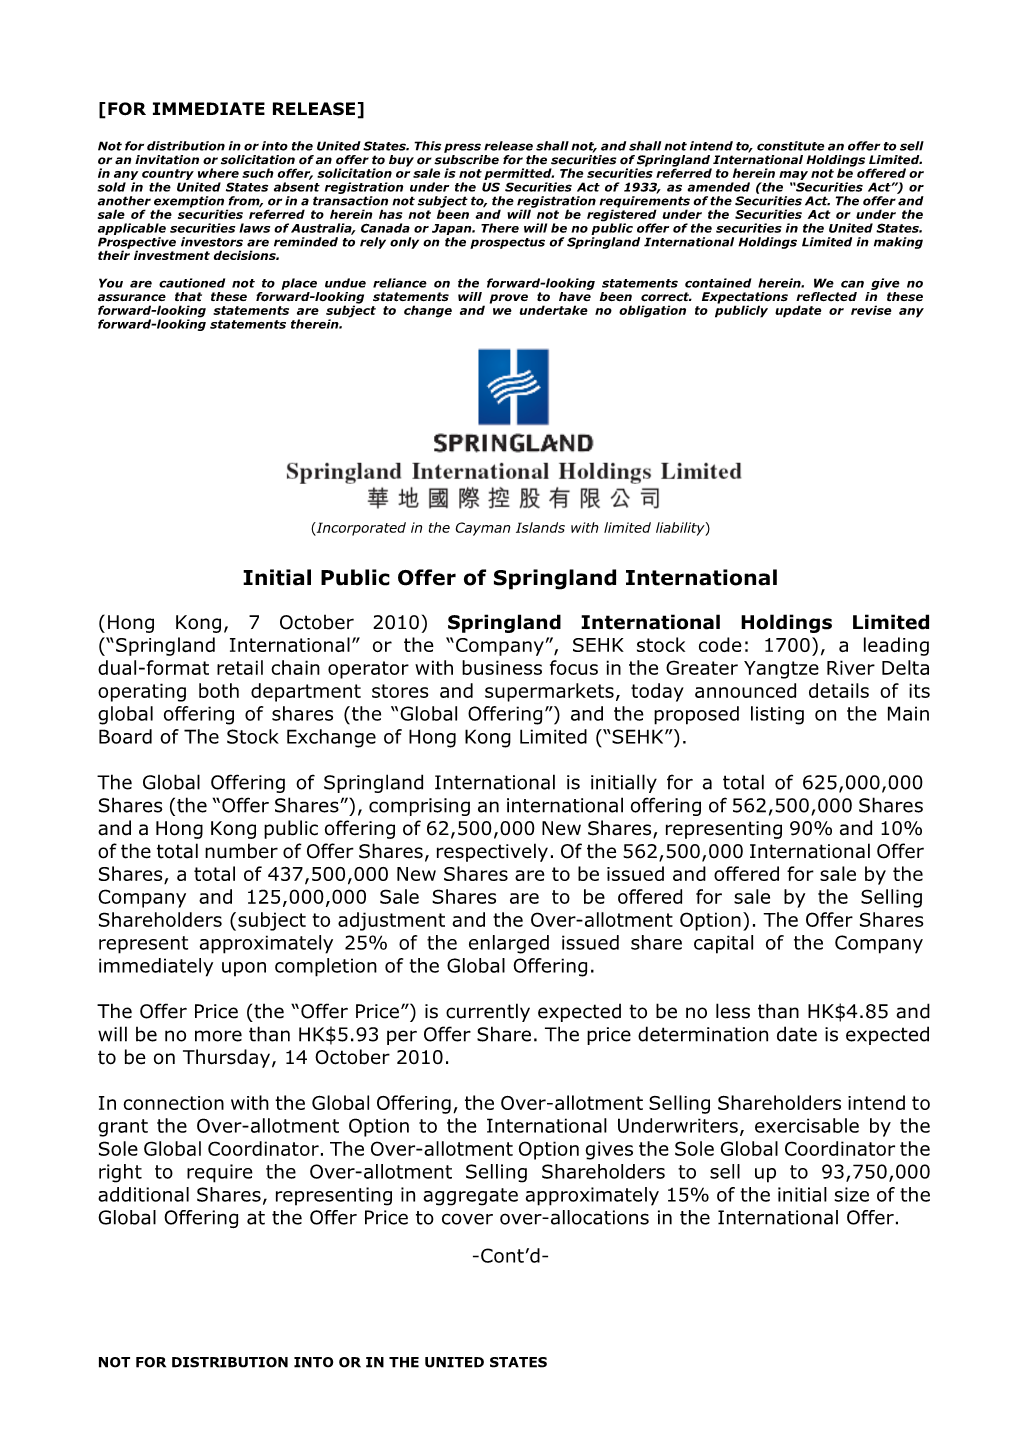 Initial Public Offer of Springland International